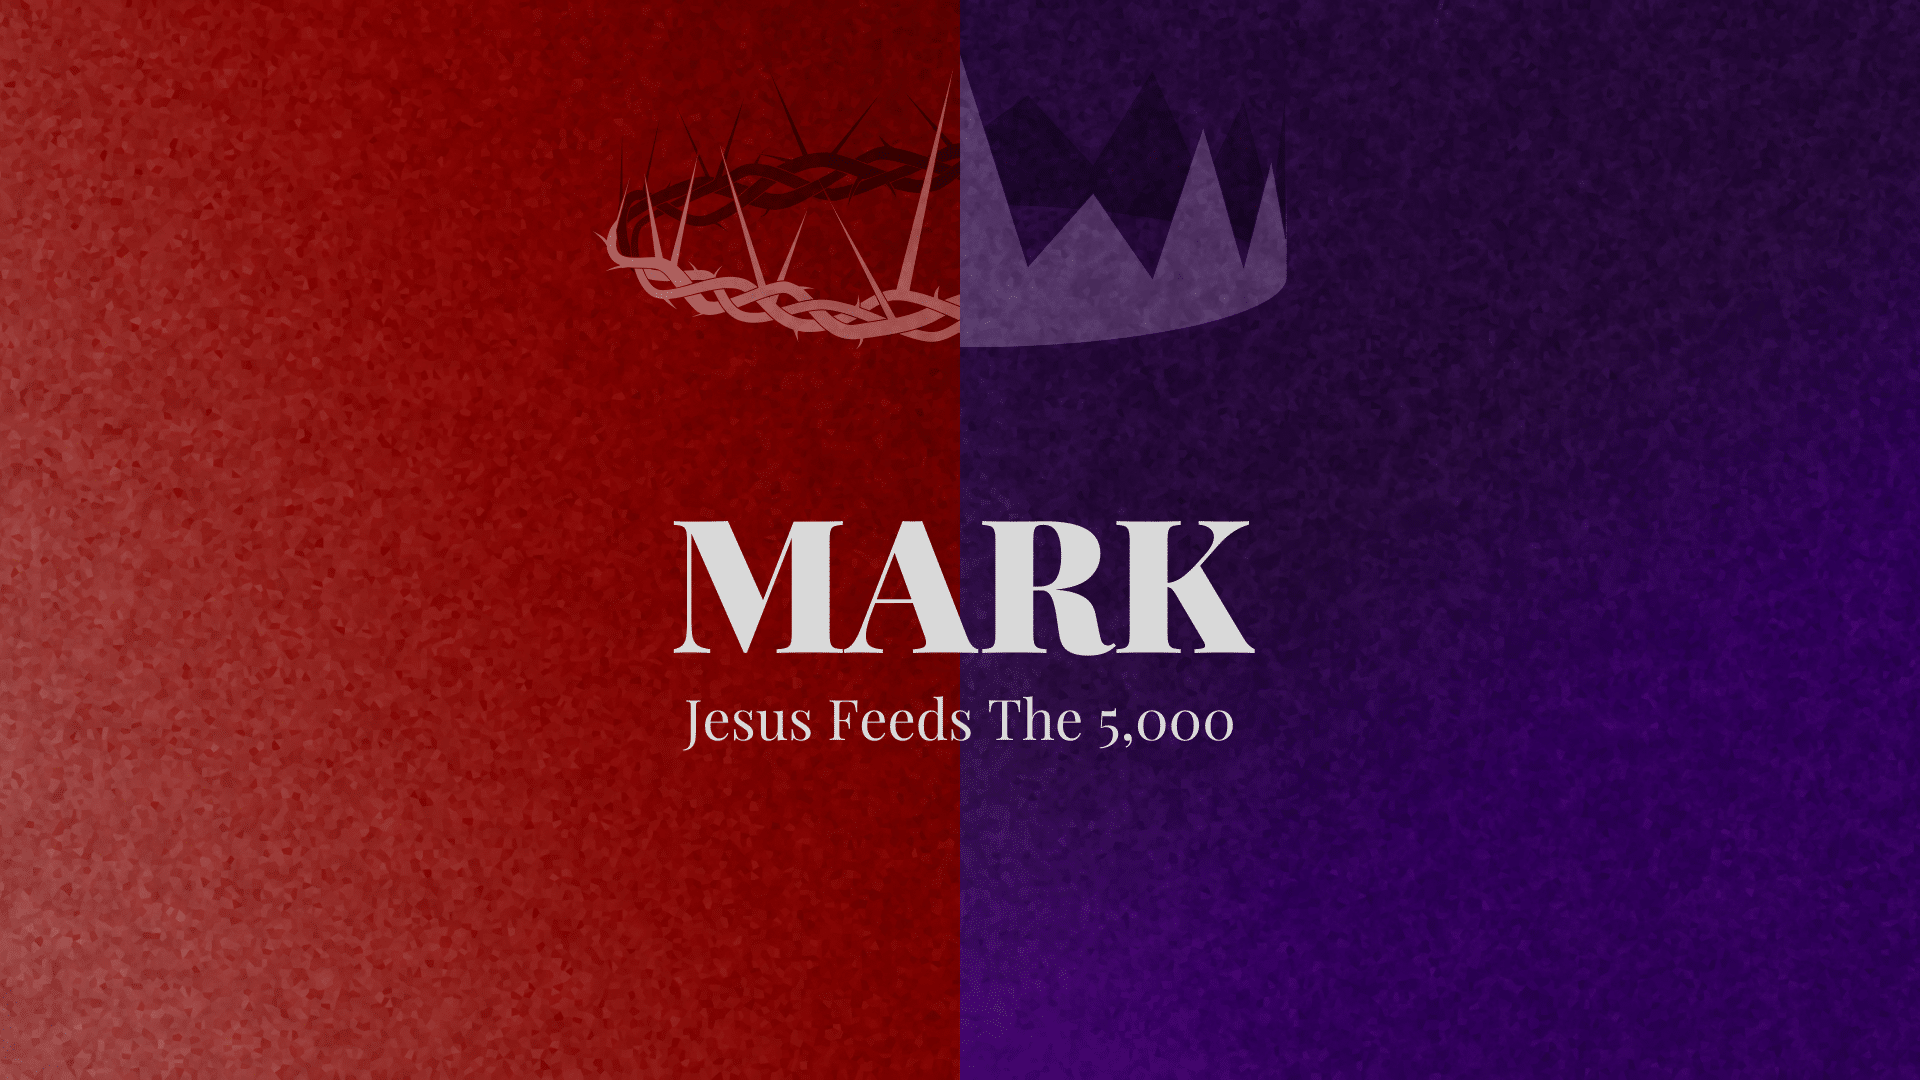 Mark: Jesus Feeds The 5,000